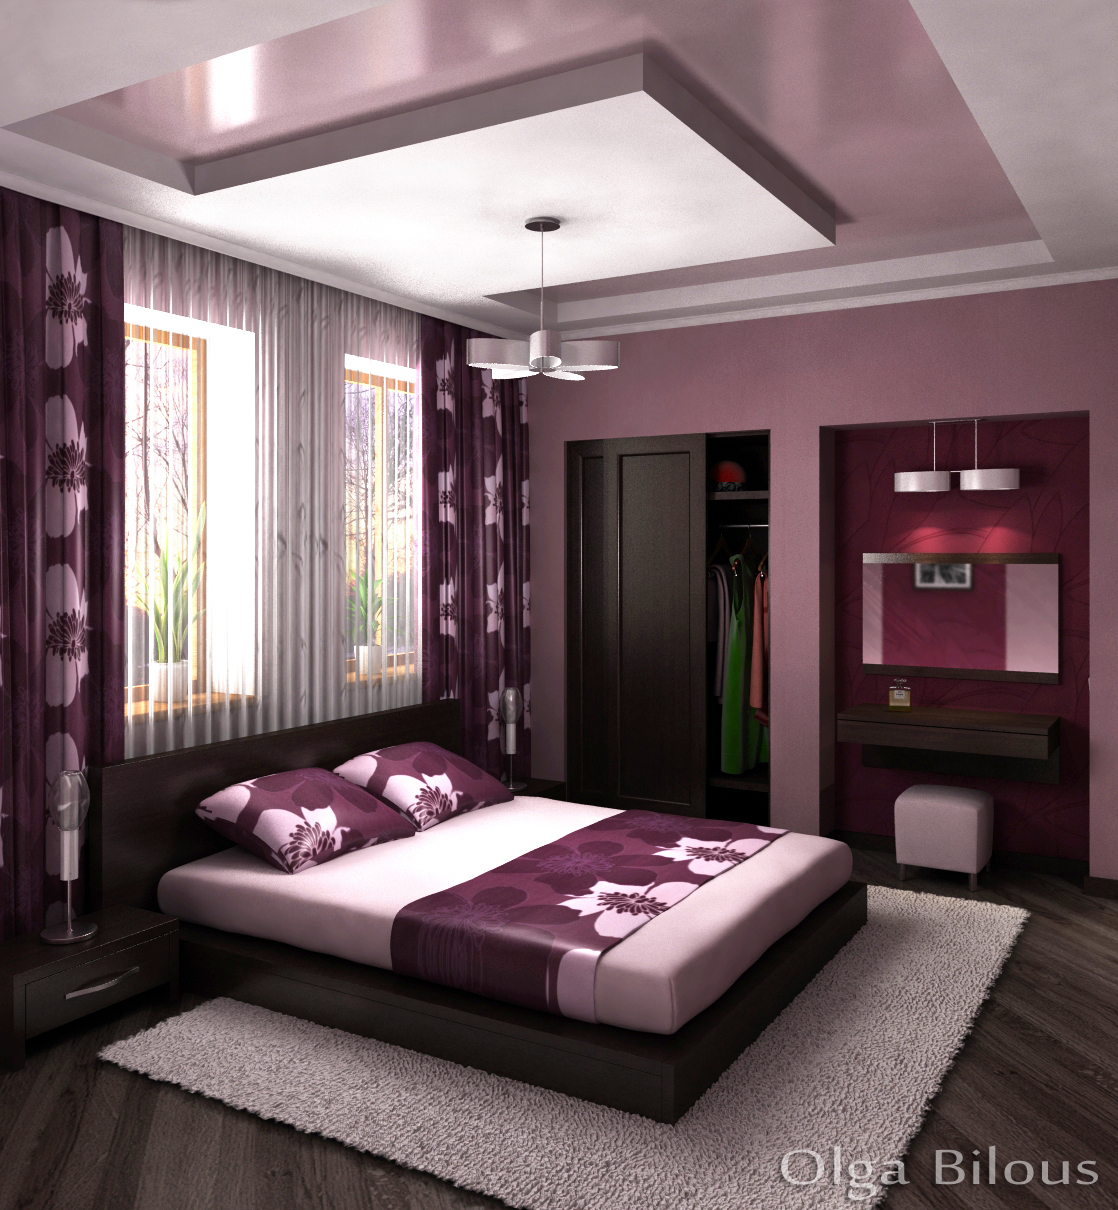 Interior design bedroom house 3D Render visualiation